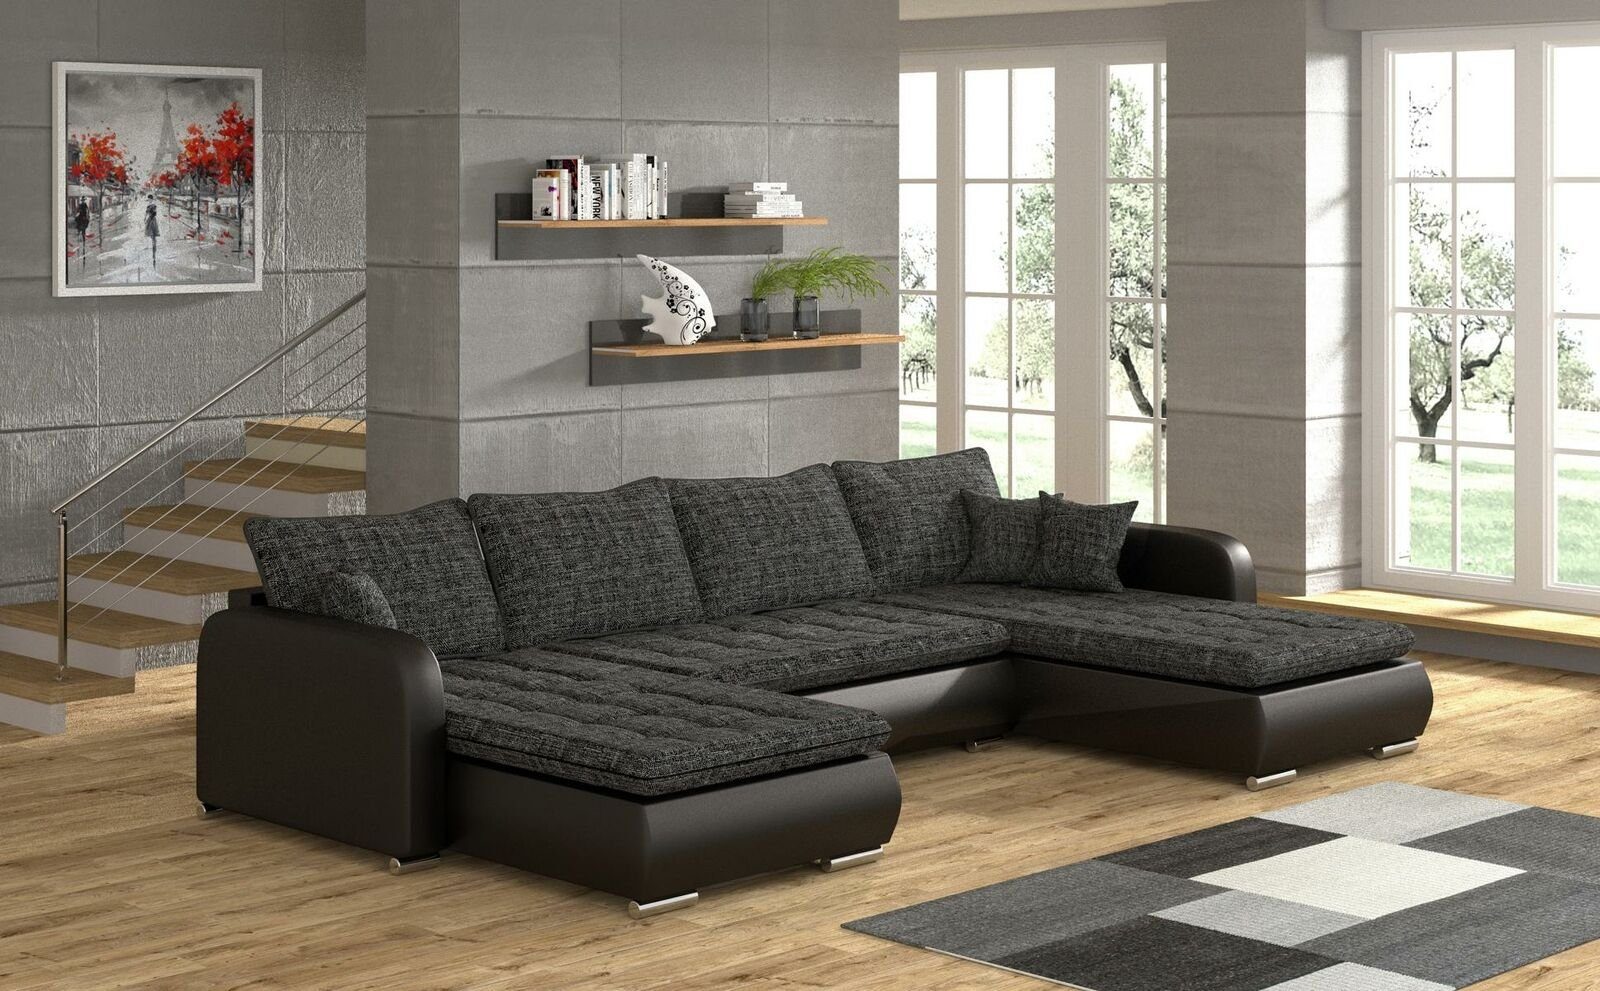 JVmoebel Sofa, Design Ecksofa U-form Bettfunktion Couch Leder Textil Sofa  Neu Wohnlandschaft online kaufen | OTTO